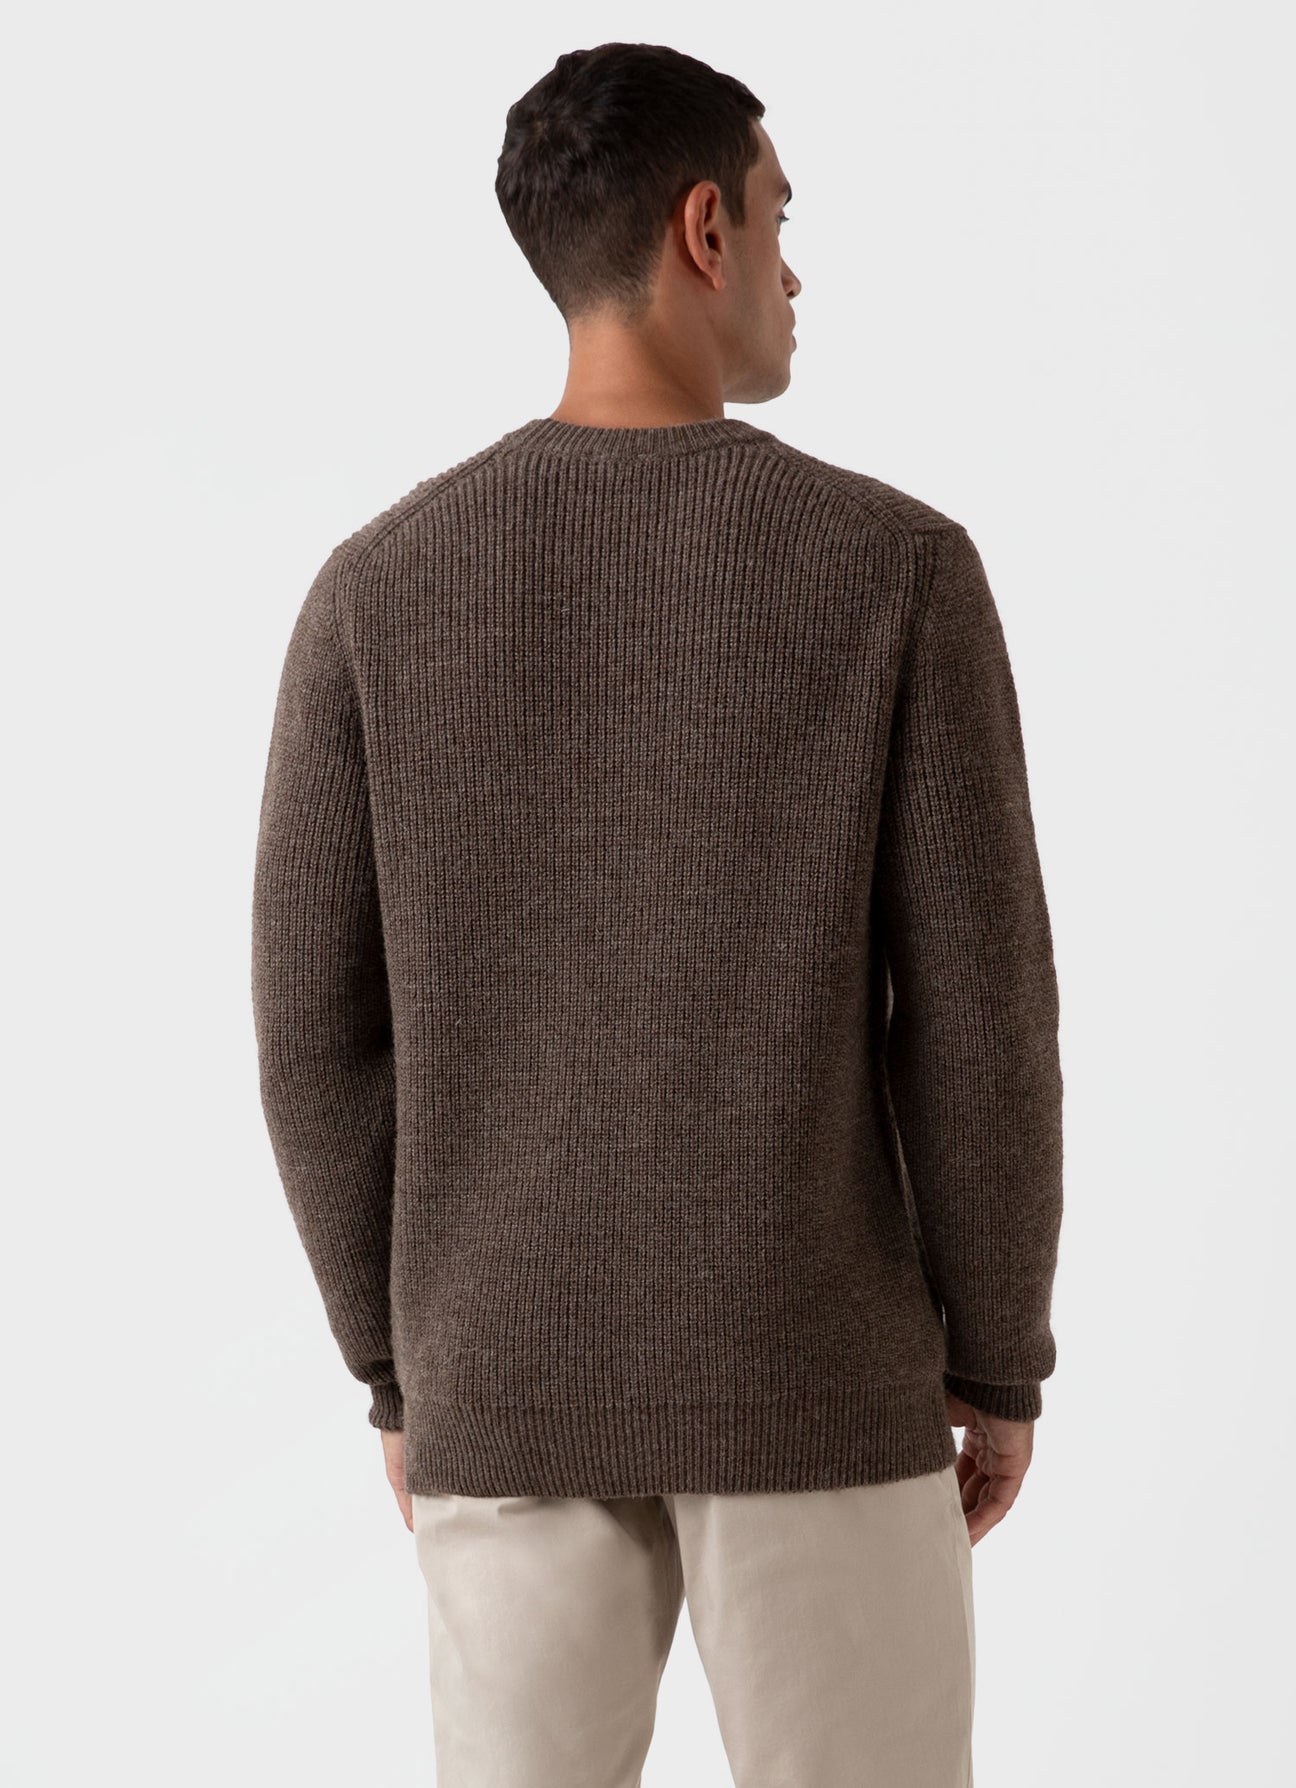 Men's Luxury British Wool Jumper in Natural Brown | Sunspel